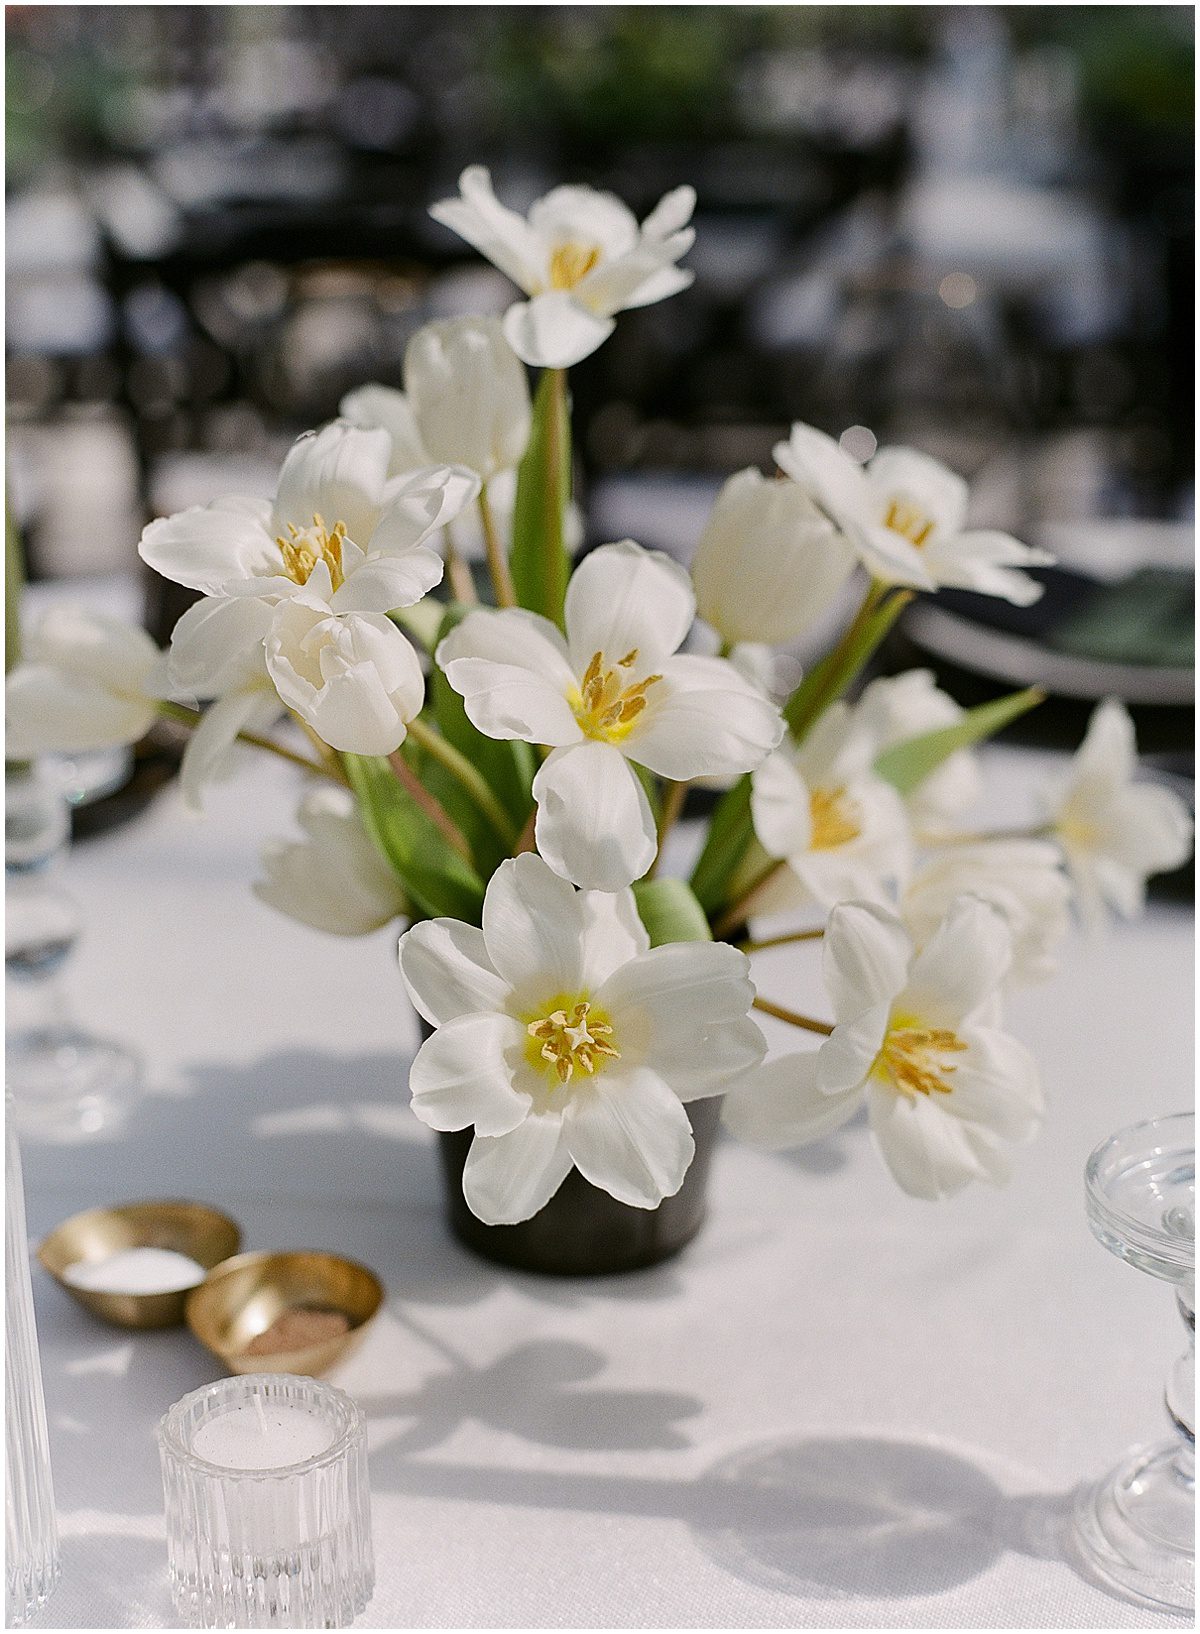 Flower arrangement on table at Wedding Reception Photo